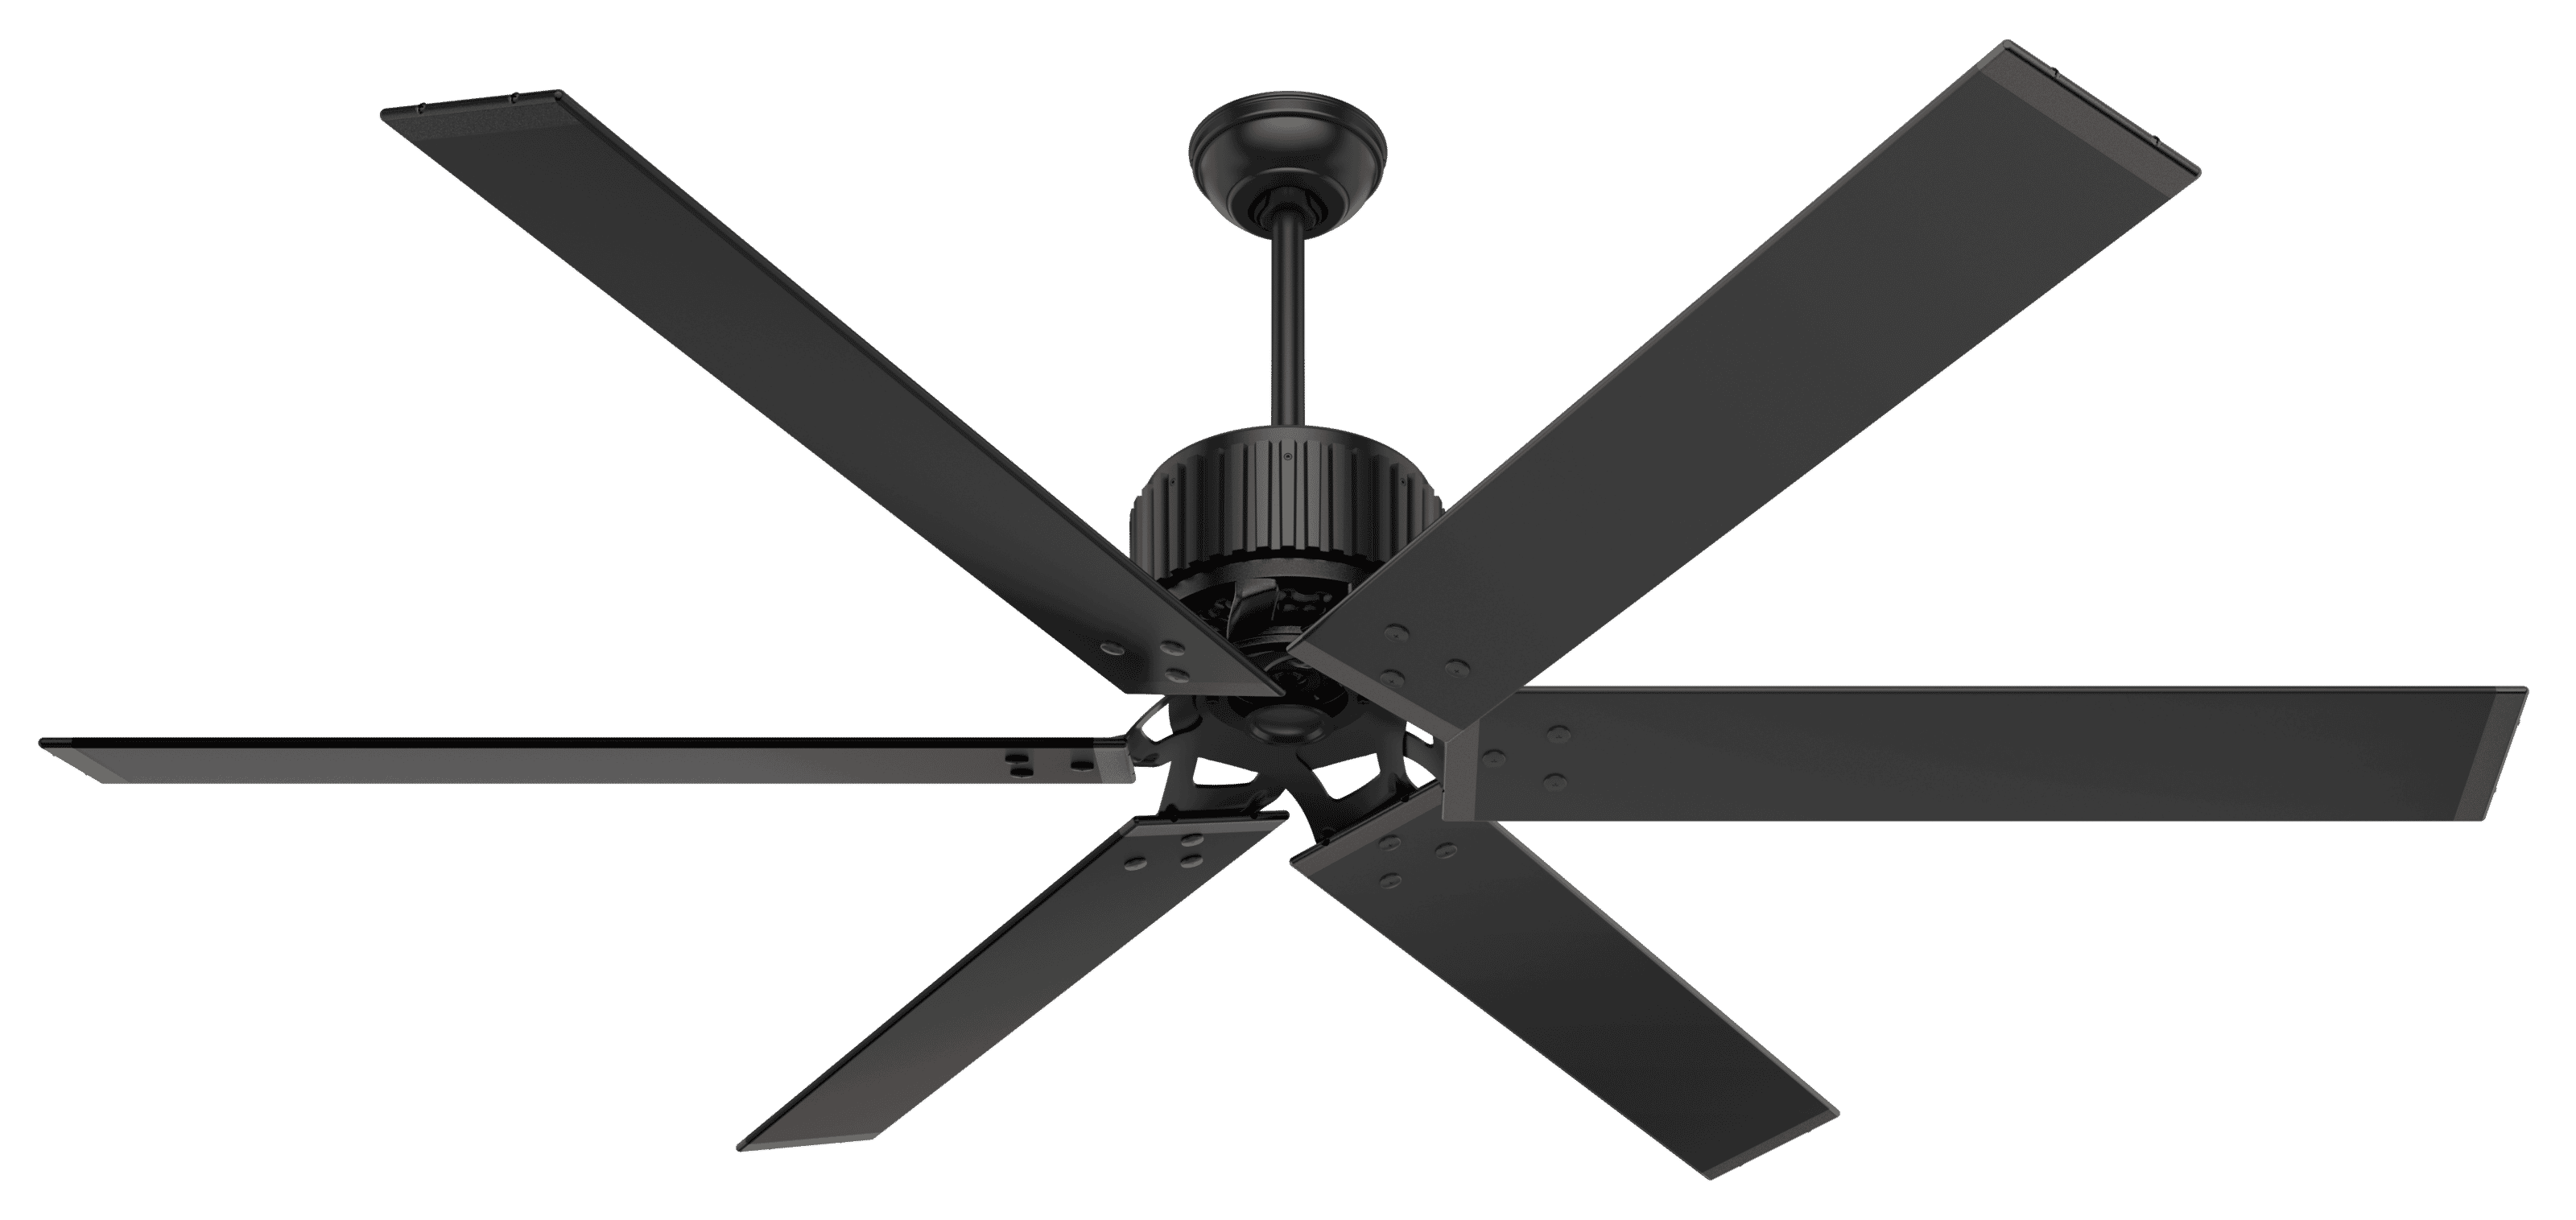 HFC-72 72"" Indoor/Outdoor Ceiling Fan in Matte Black -  Hunter Fans, 59136